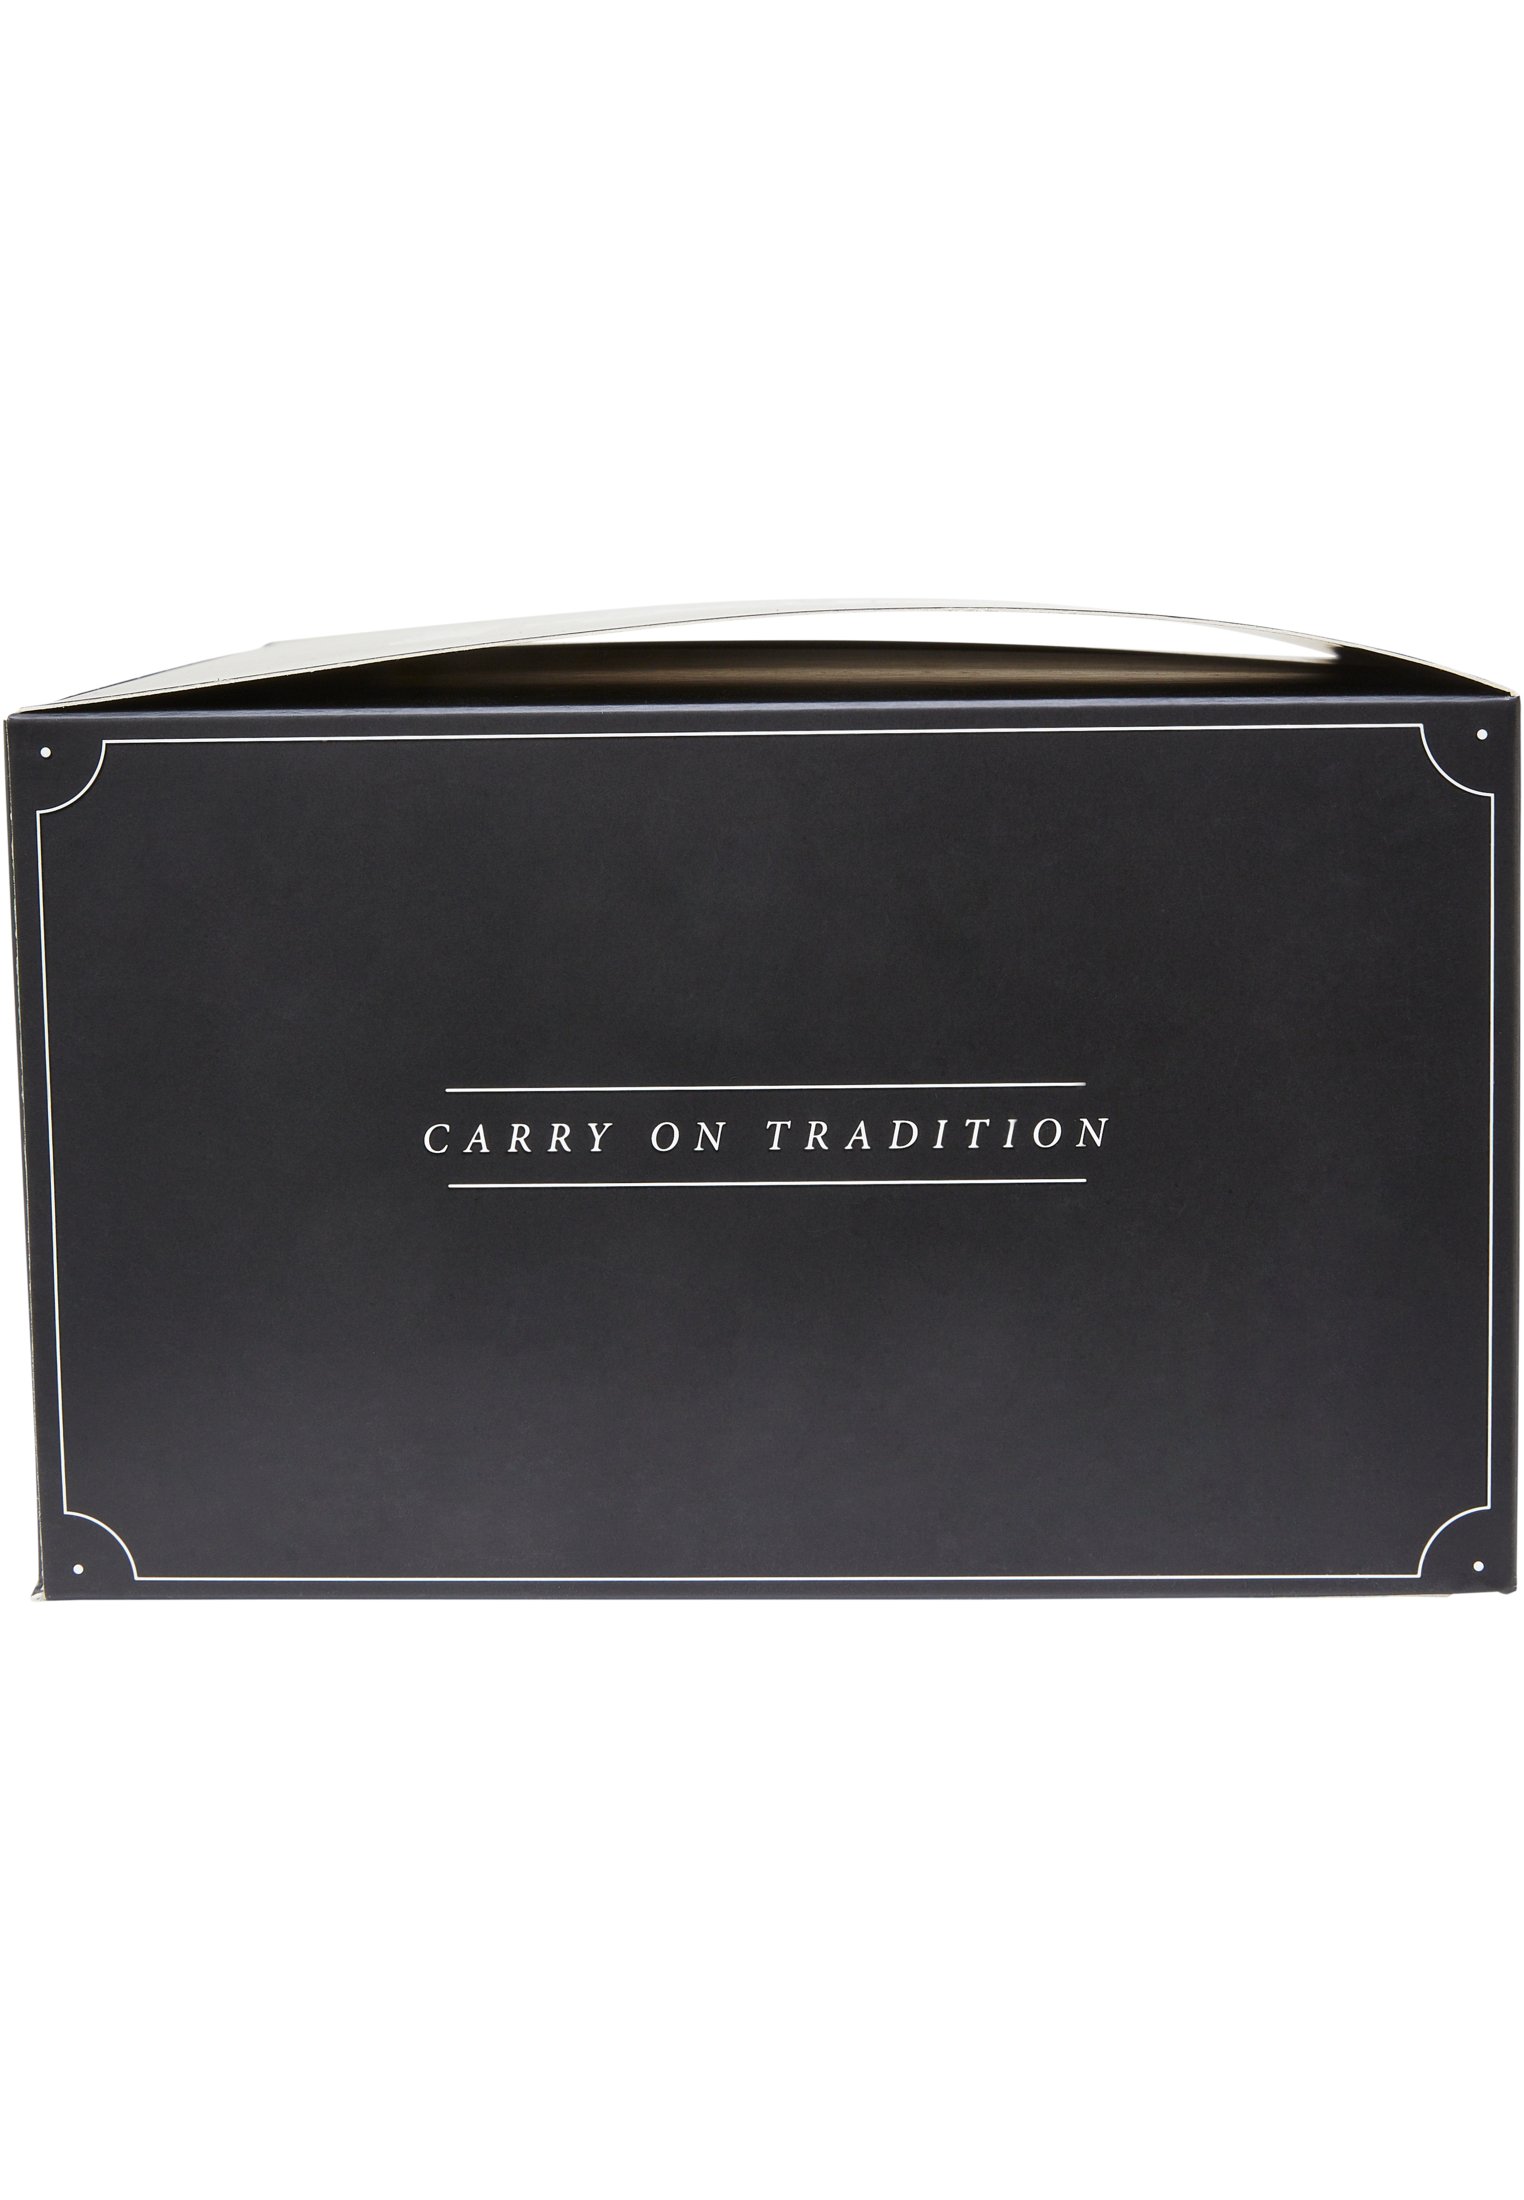 Cayler & Sons Capbox black one size